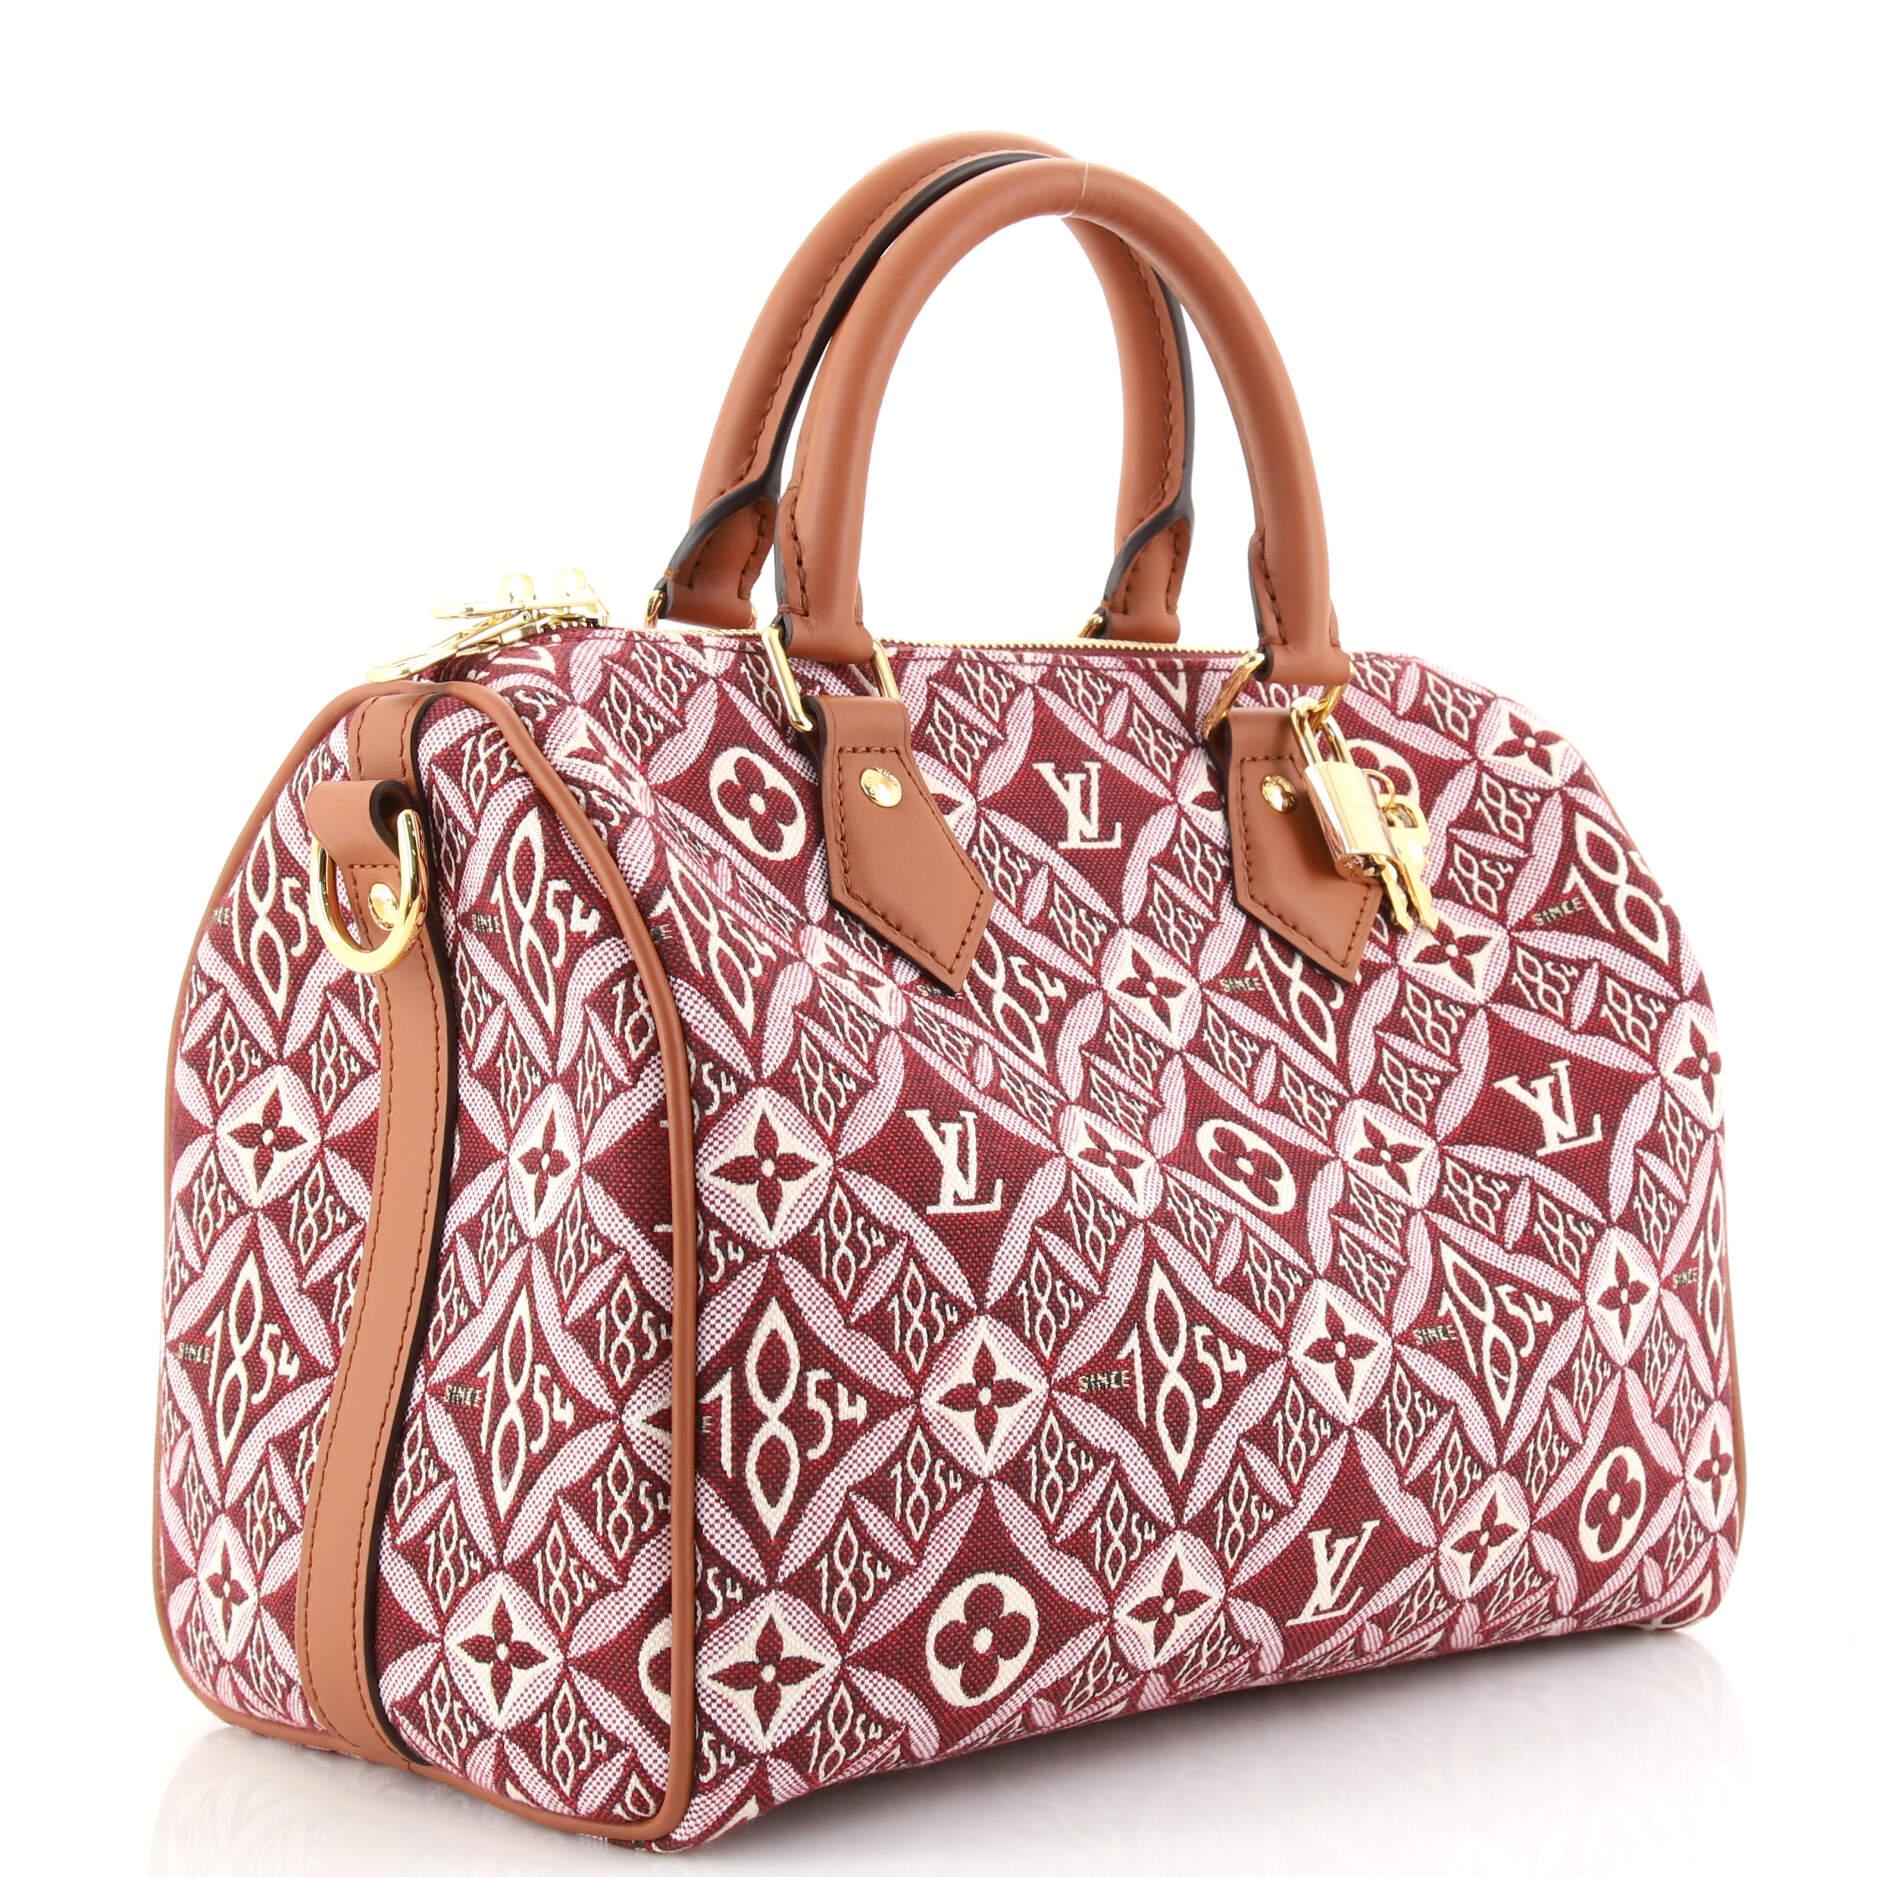 Brown Louis Vuitton Speedy Bandouliere Bag Limited Edition Since 1854 Monogram 25